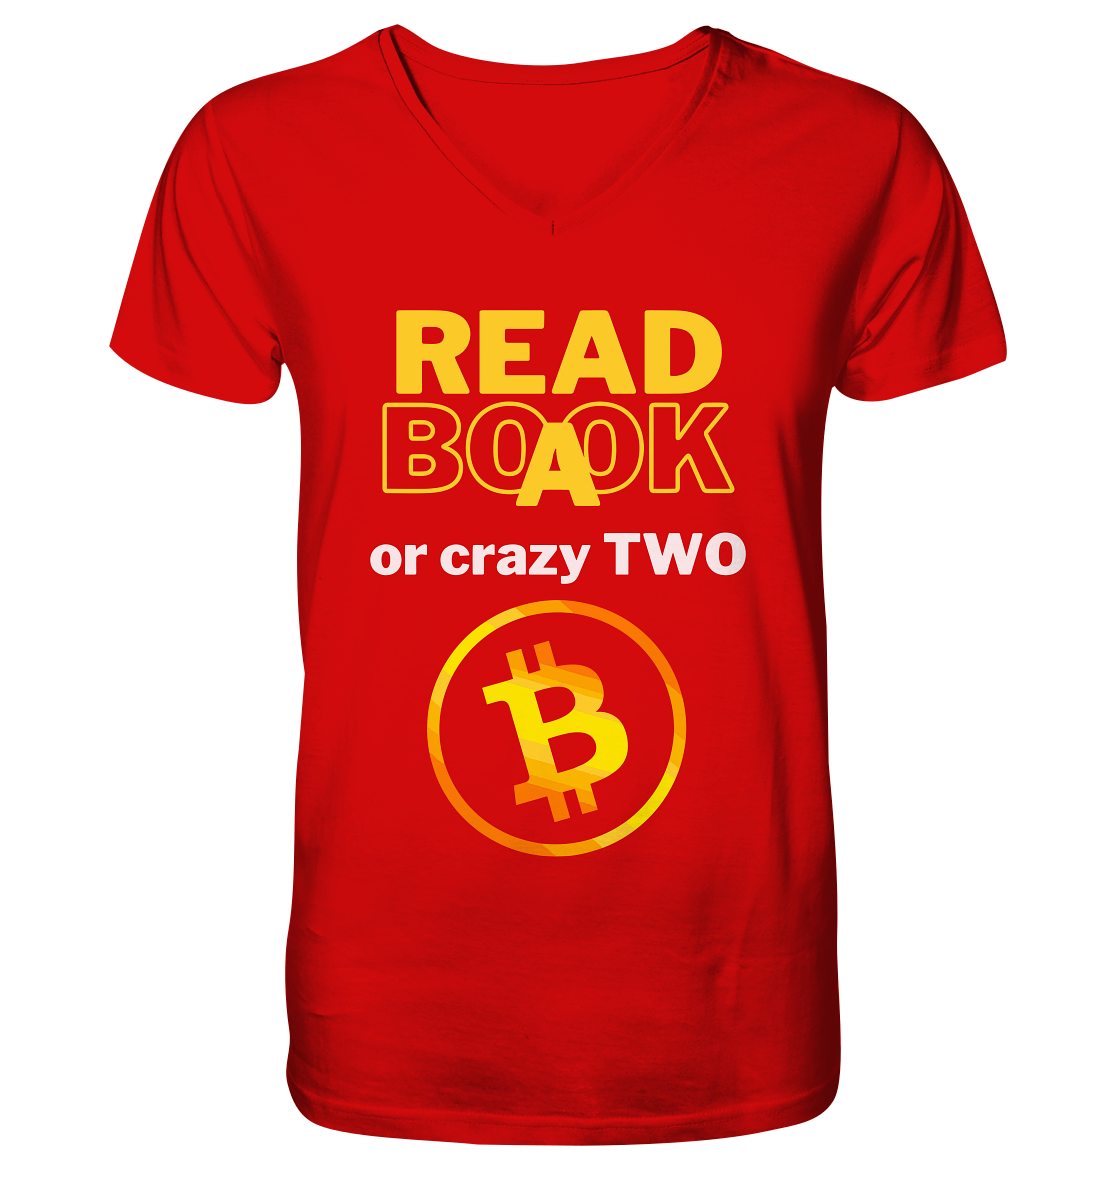 READ A BOOK or CRAZY TWO - Variante "Book" im Hintergrund - V-Neck Shirt